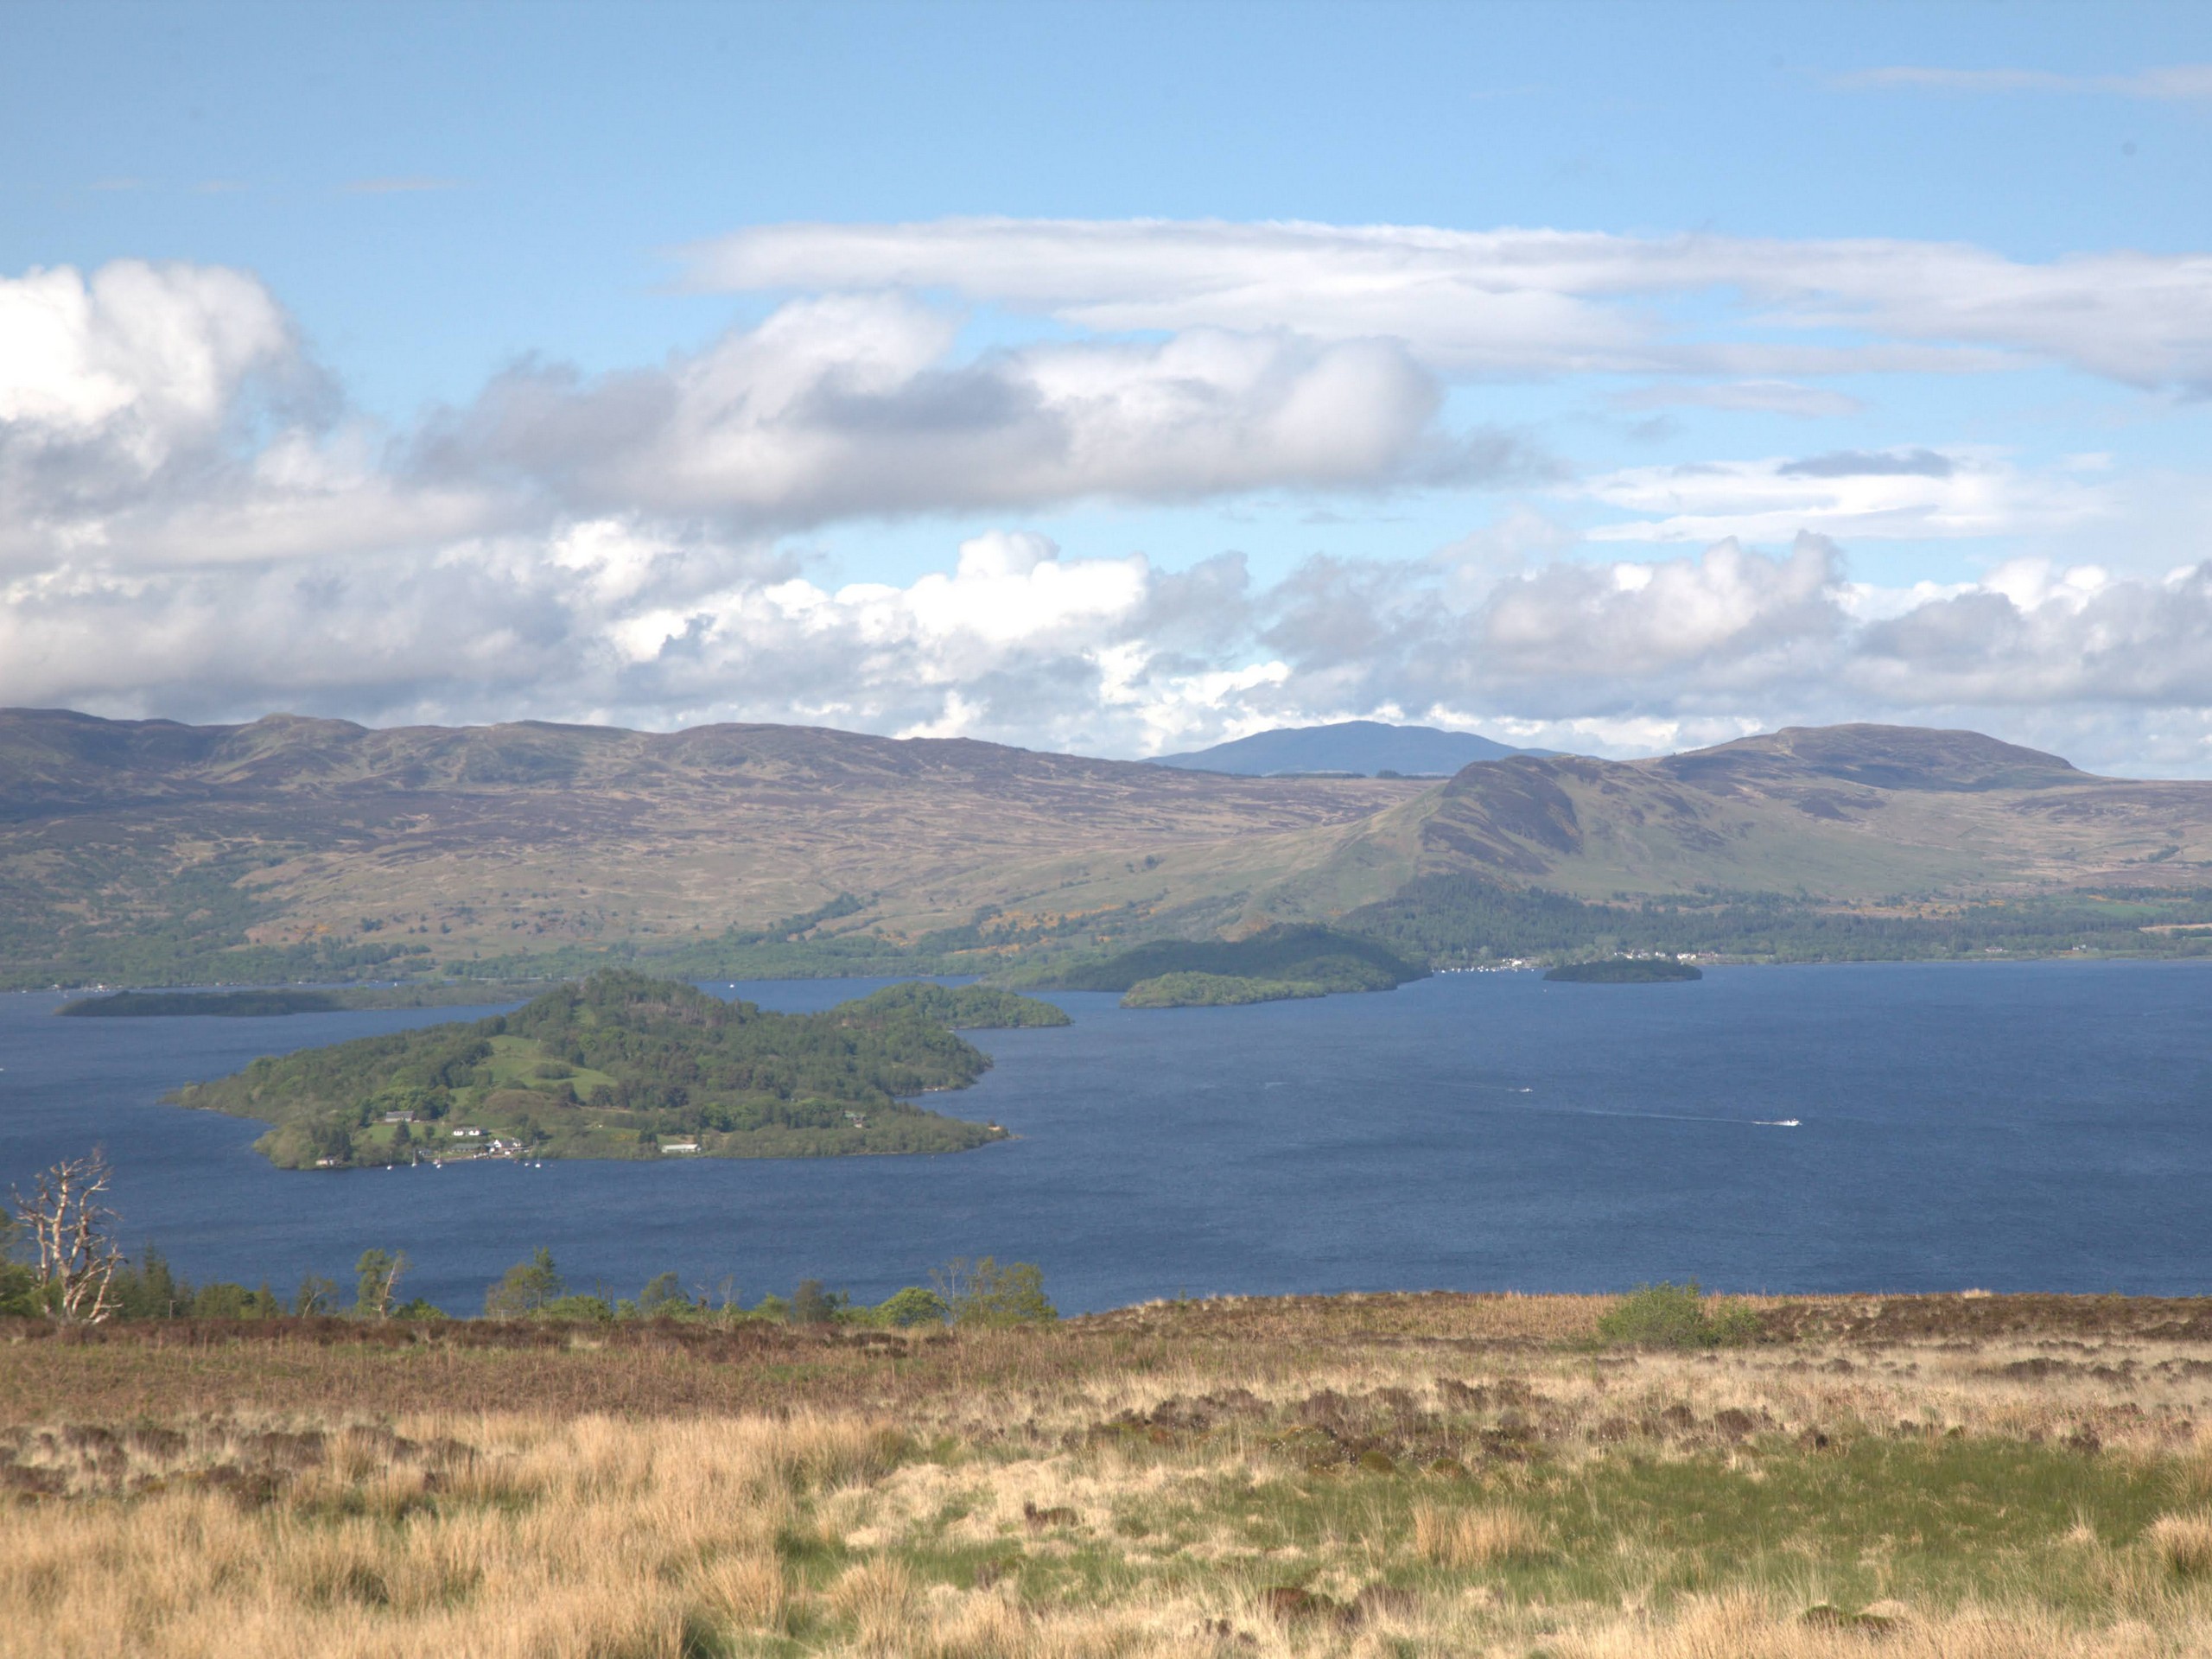 Beautiful views from John Muir trail in Schotland